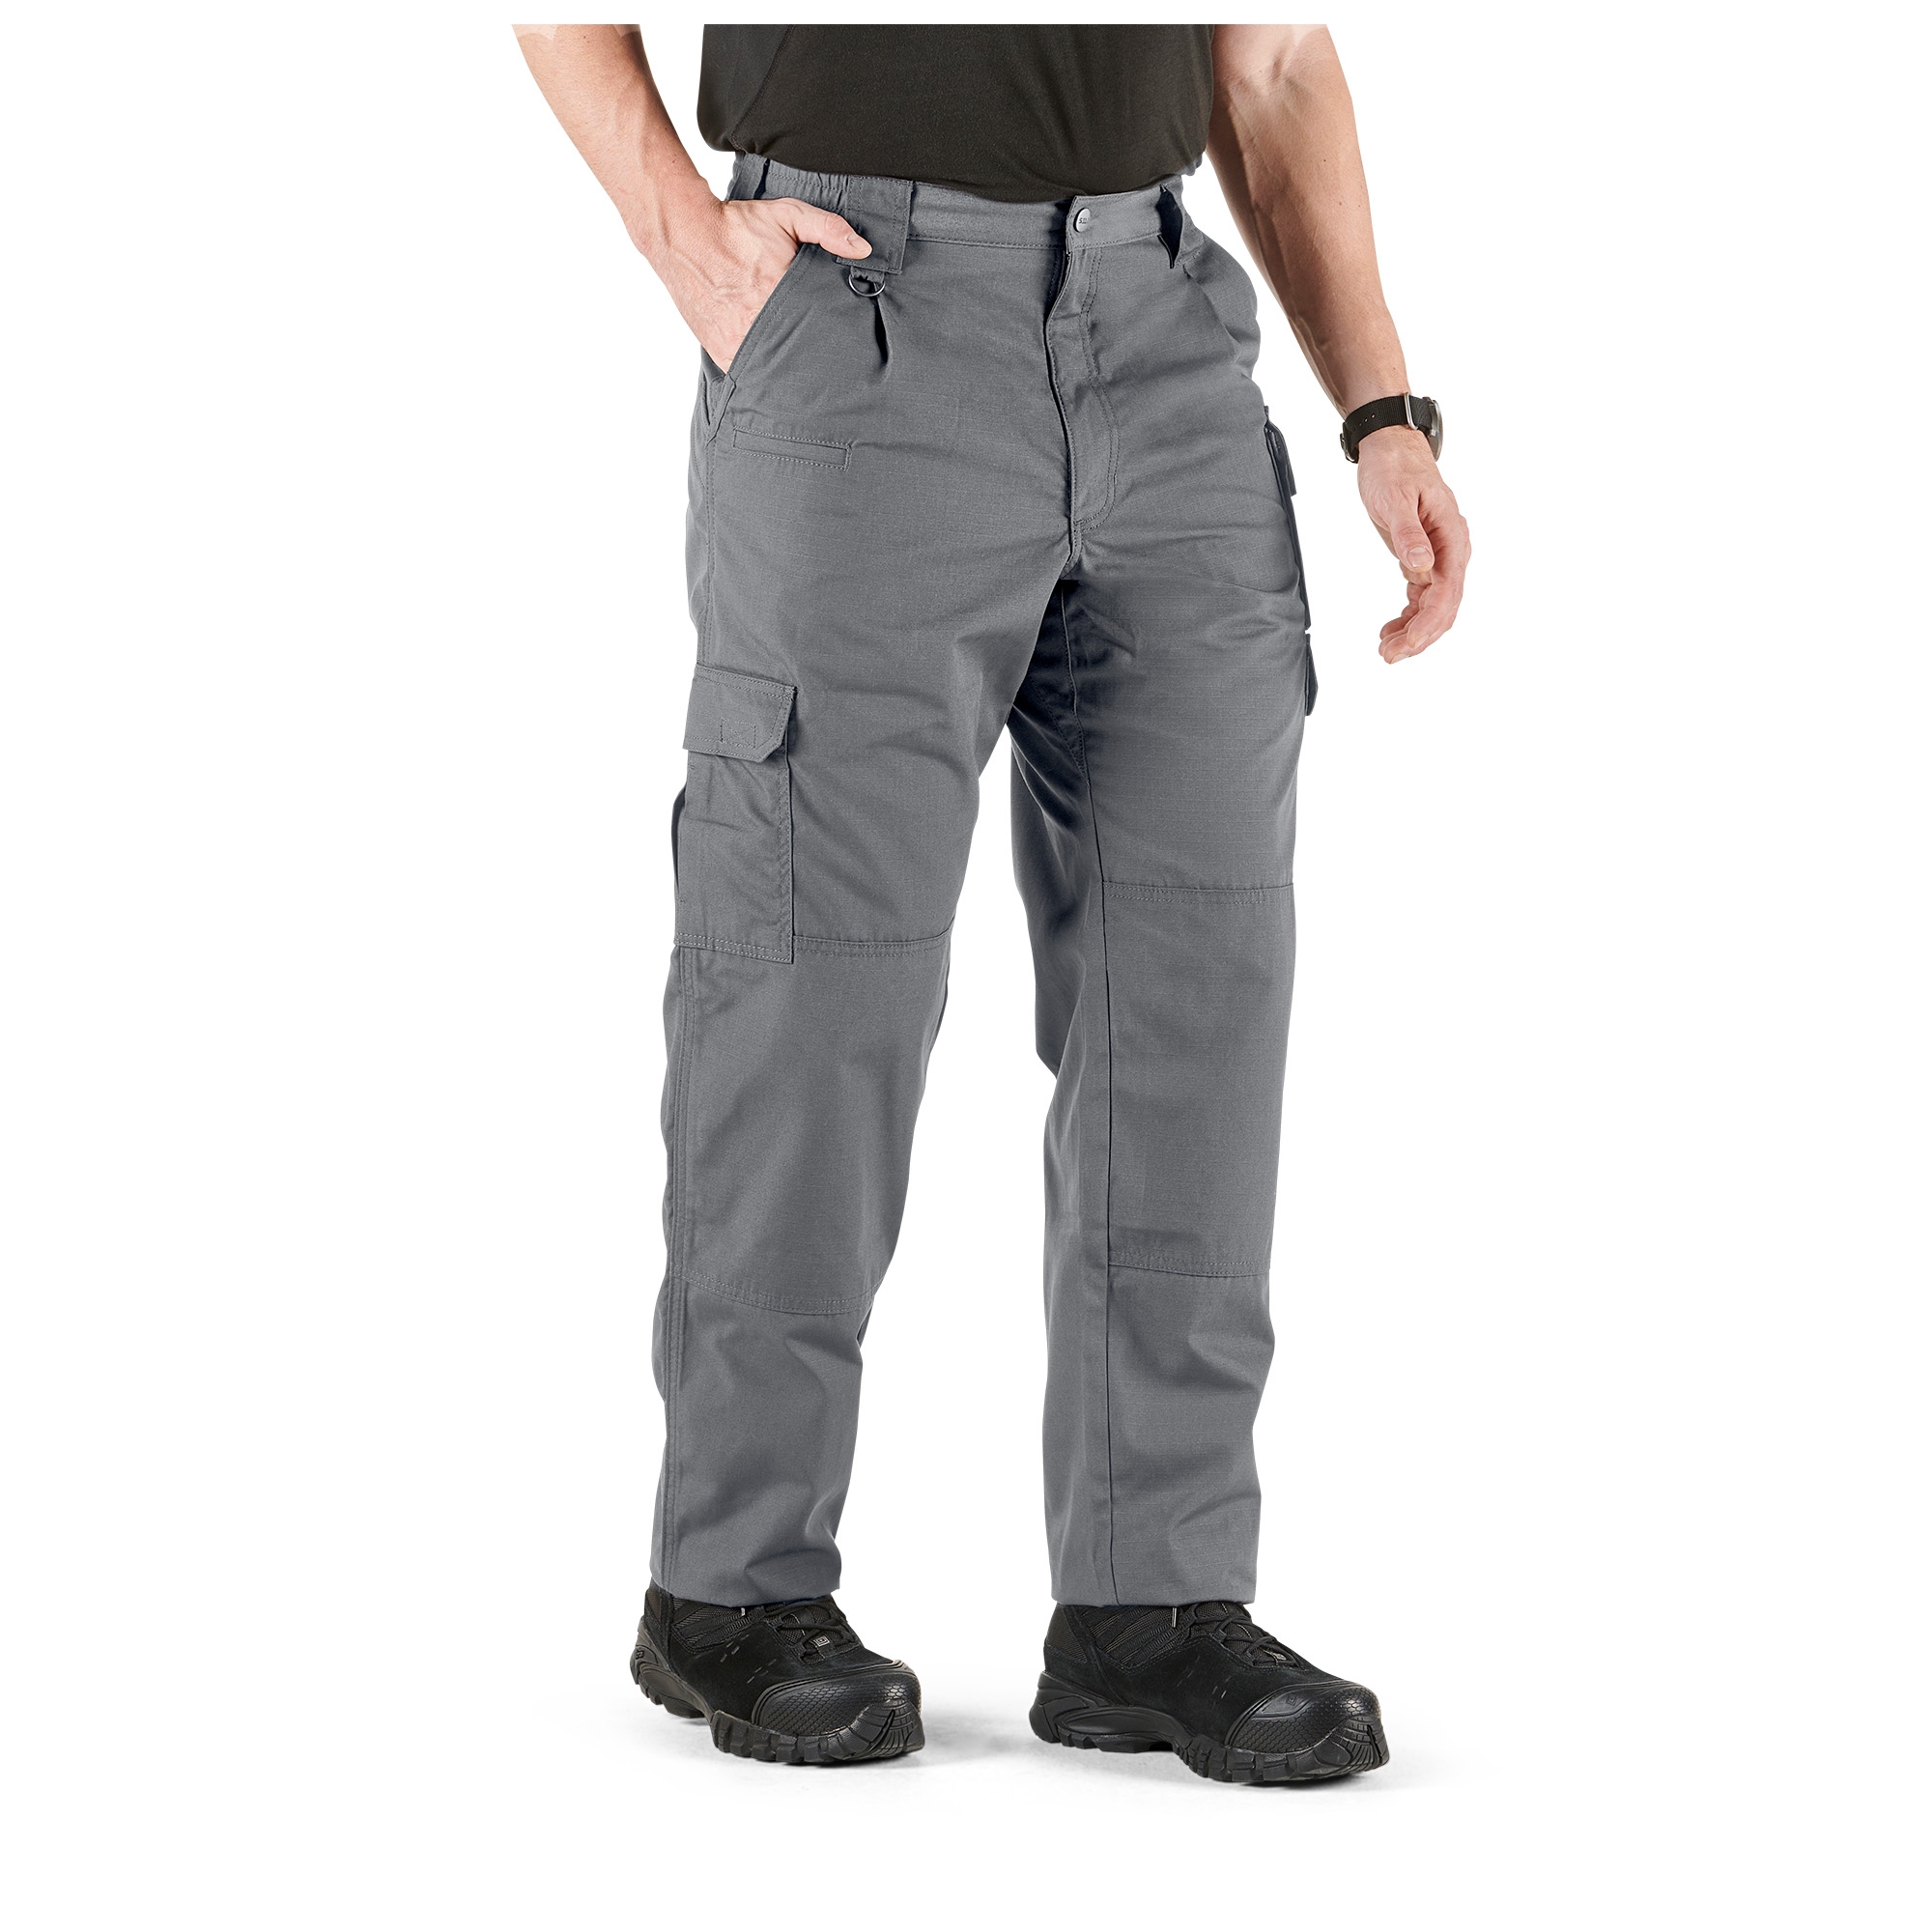 511 Tactical Cargo Trousers Pant For Men price in UAE  Amazon UAE   kanbkam